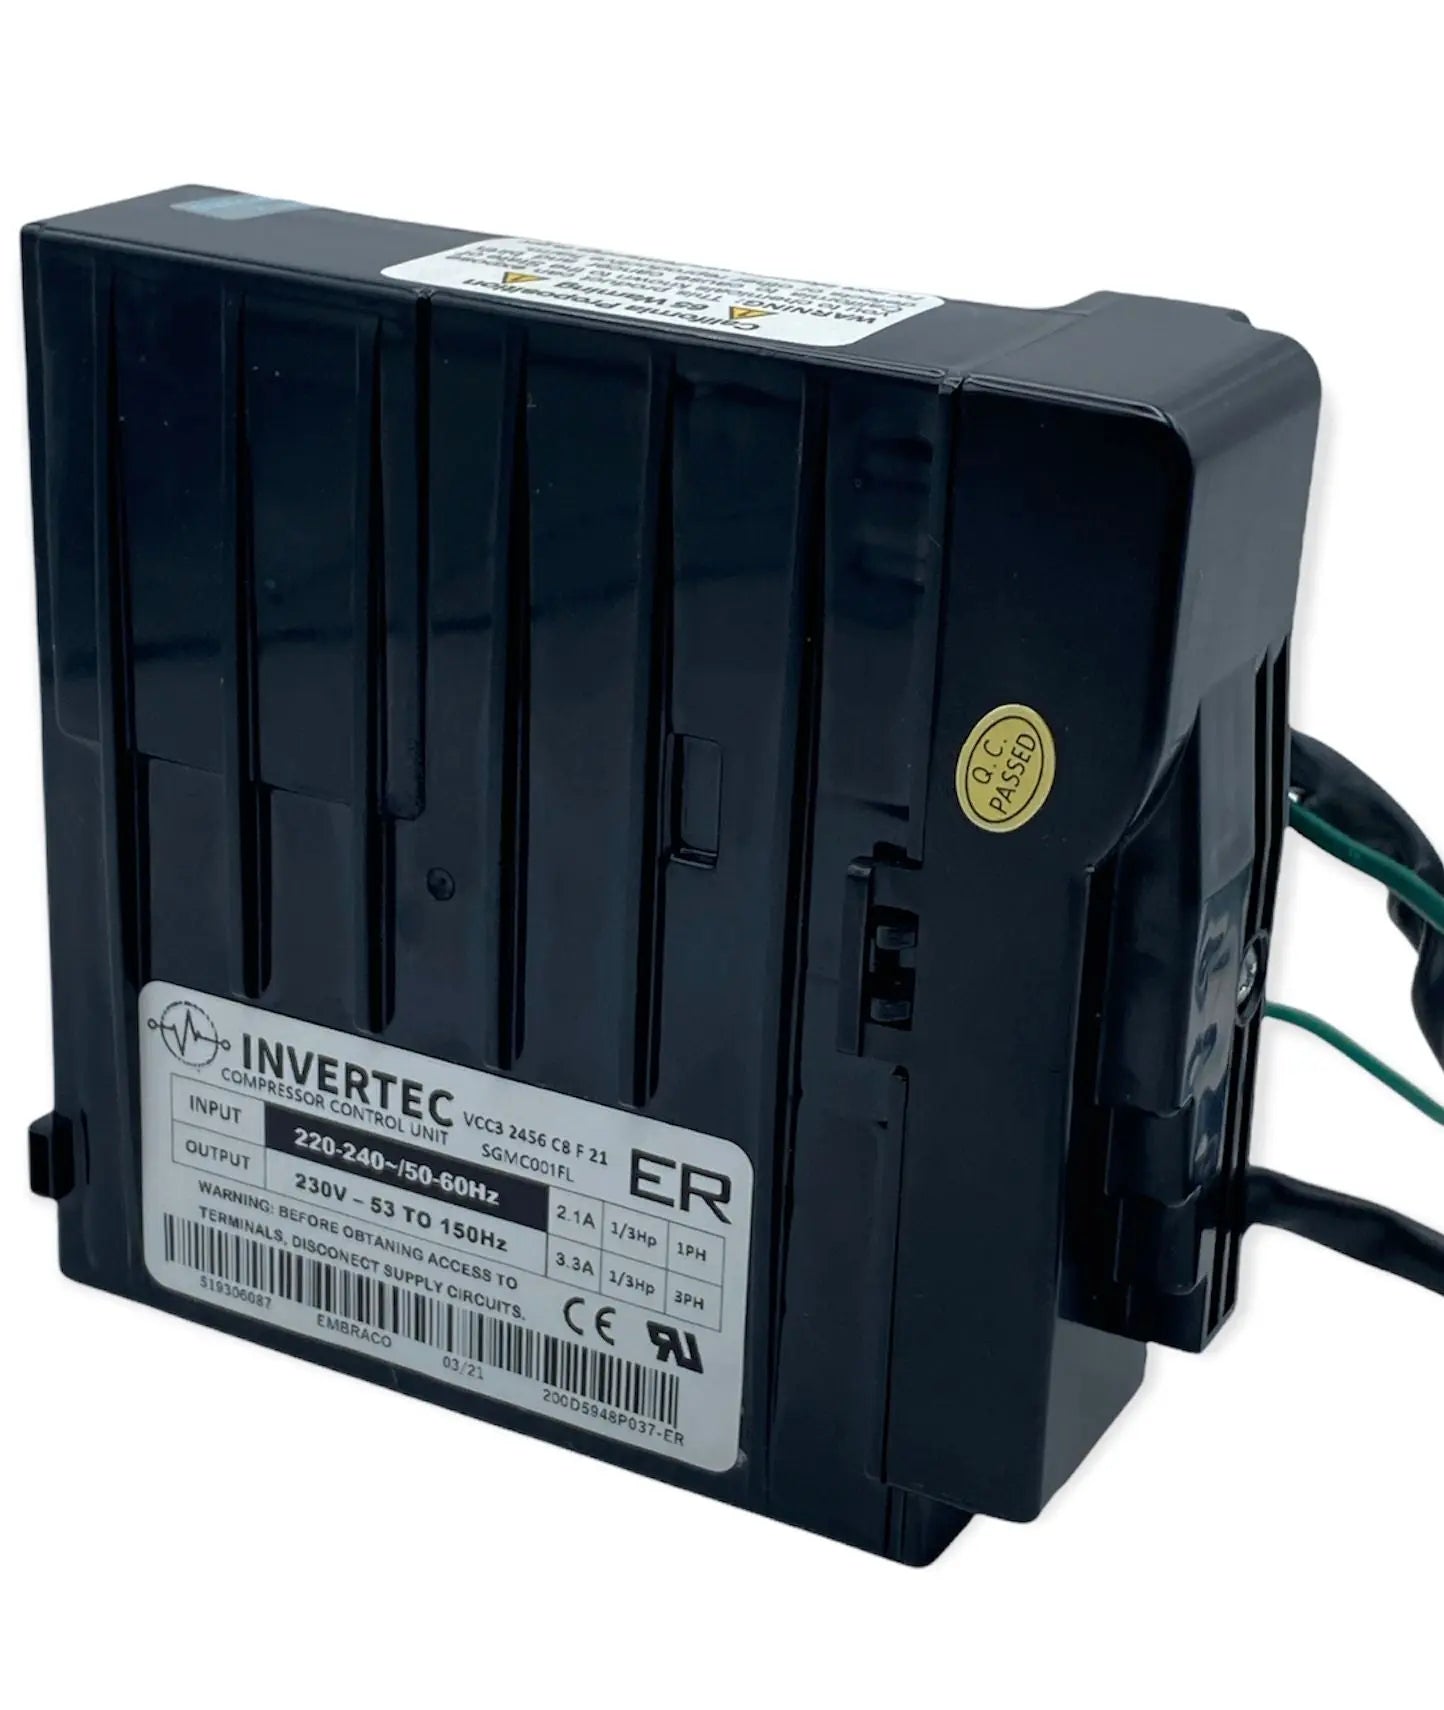 G.E /Haier Refrigerator Inverter Board Kit - 200D5948P037-220V,  REPLACES: 200D5948P038  519306087 INVERTEC